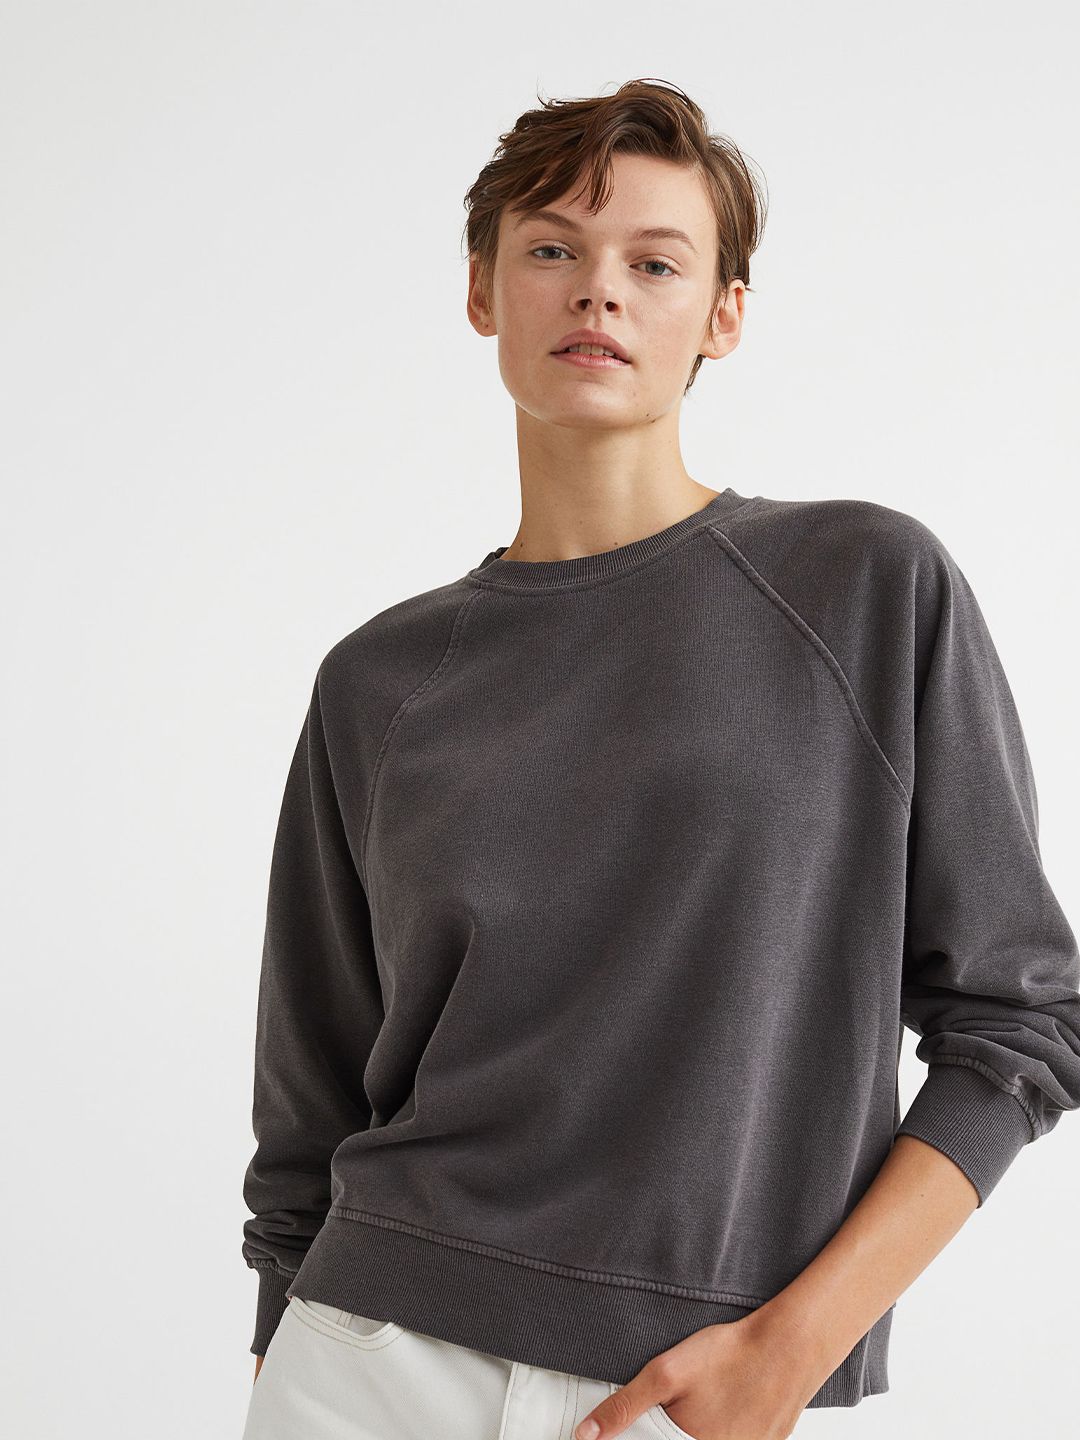 H&M Grey Crew-Neck Sweatshirt Price in India